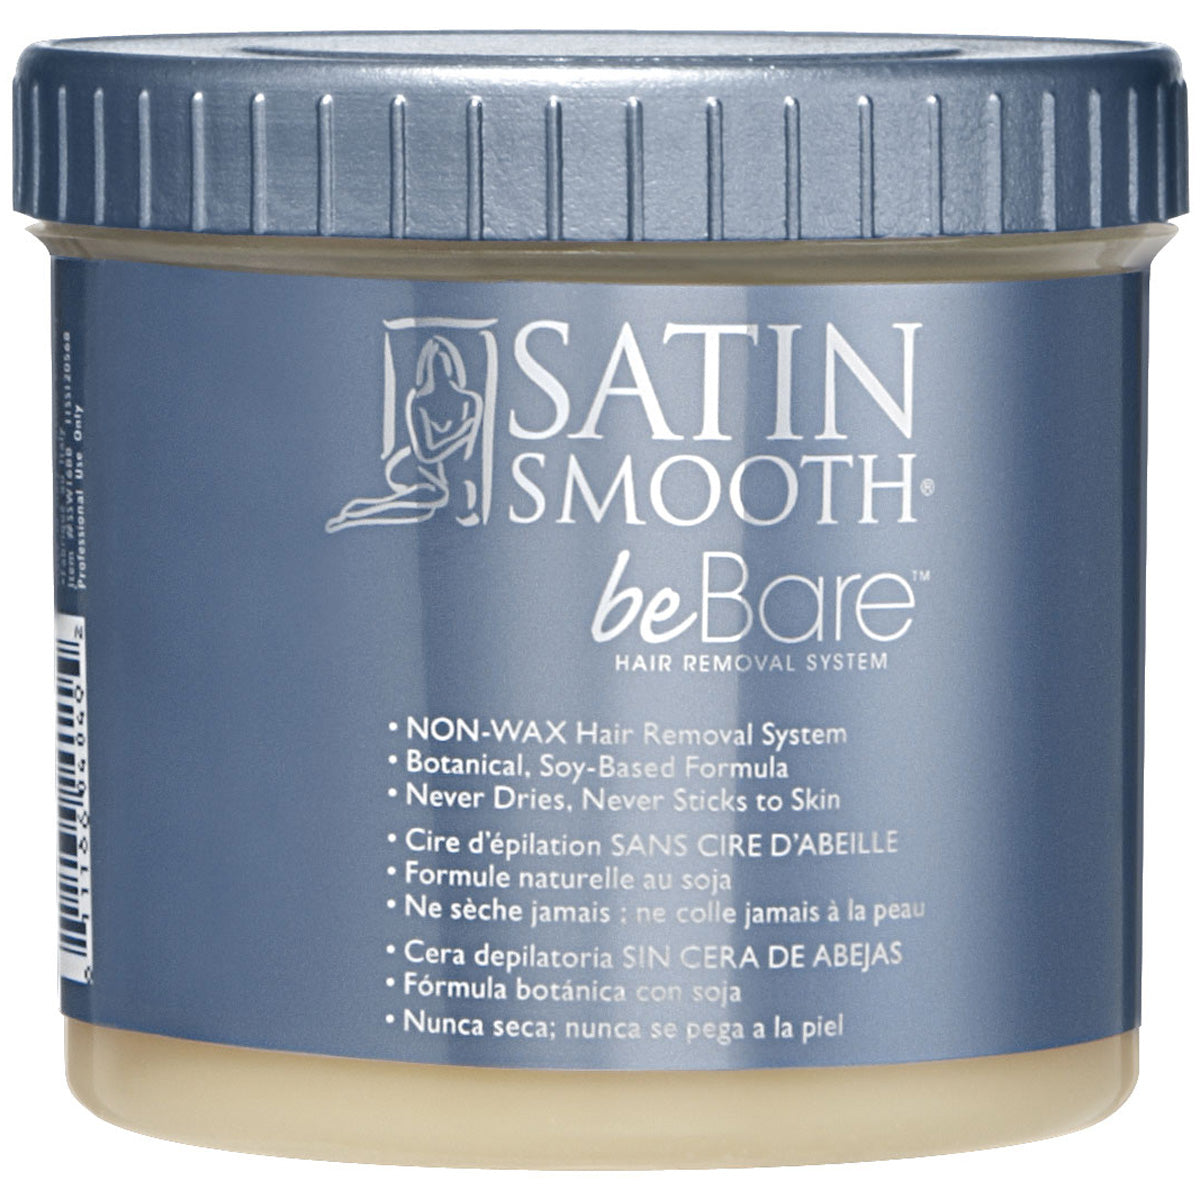 BeBare Satin Smooth Hair Removal System 16oz